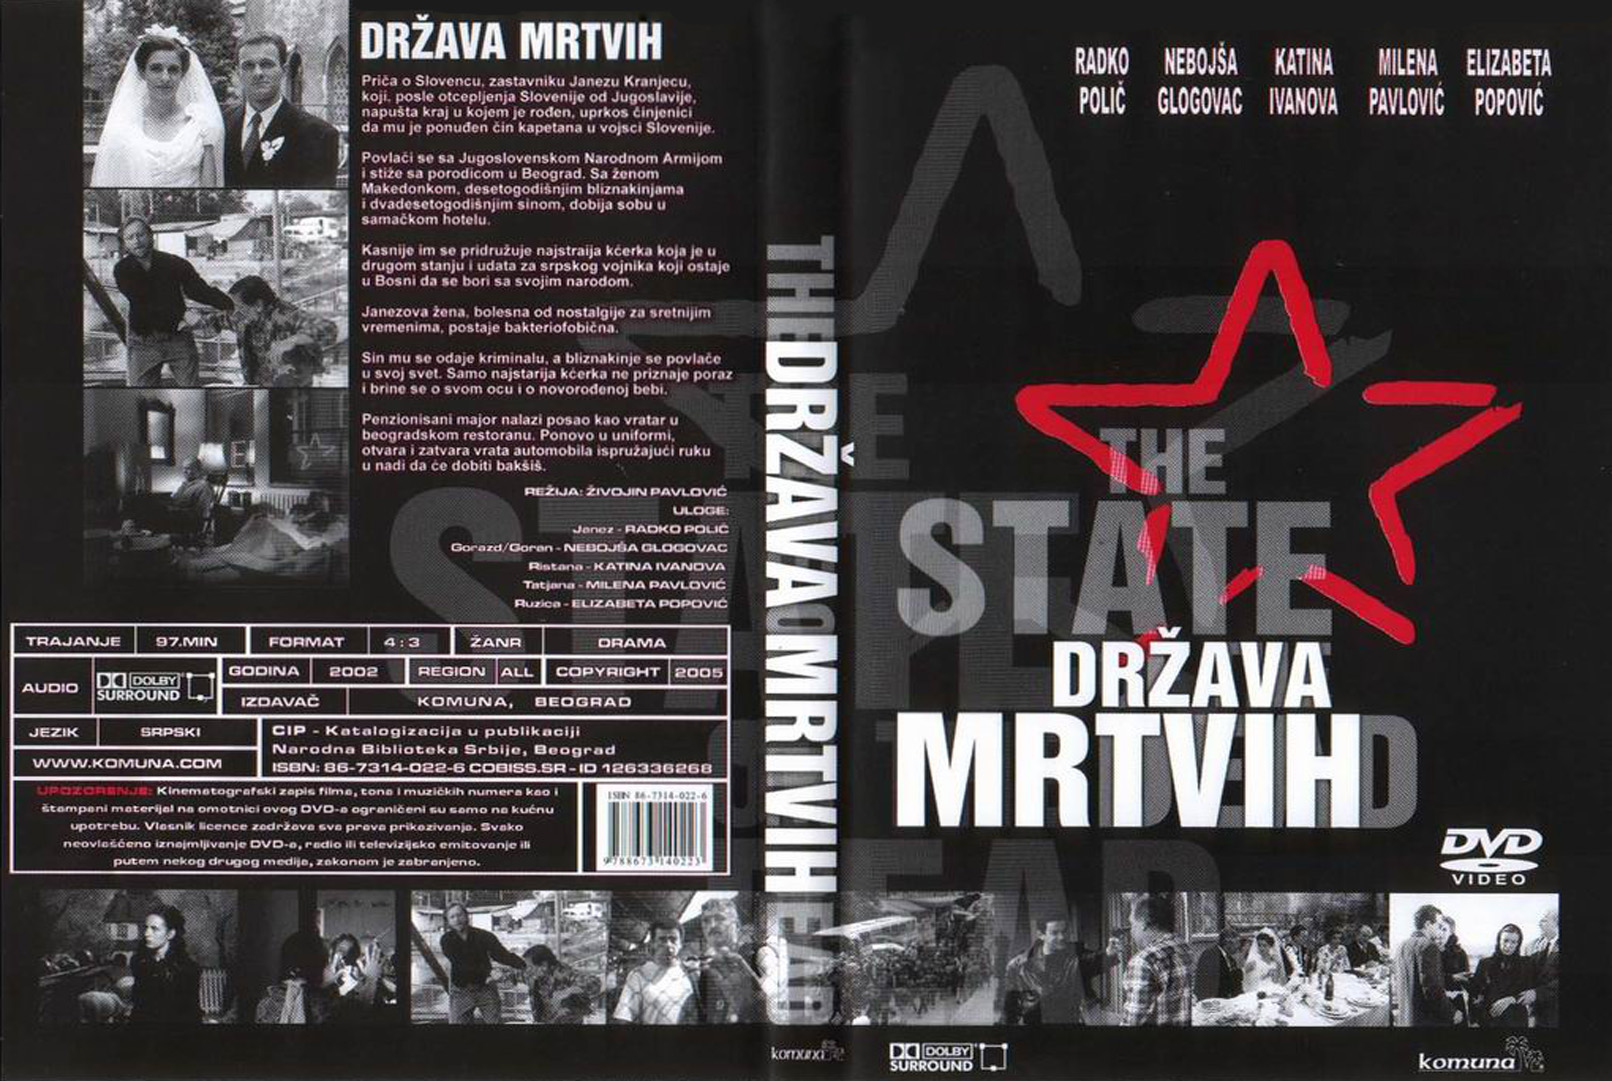 Click to view full size image -  DVD Cover - D - DVD - DRZAVA MRTVIH - DVD - DRZAVA MRTVIH.jpg